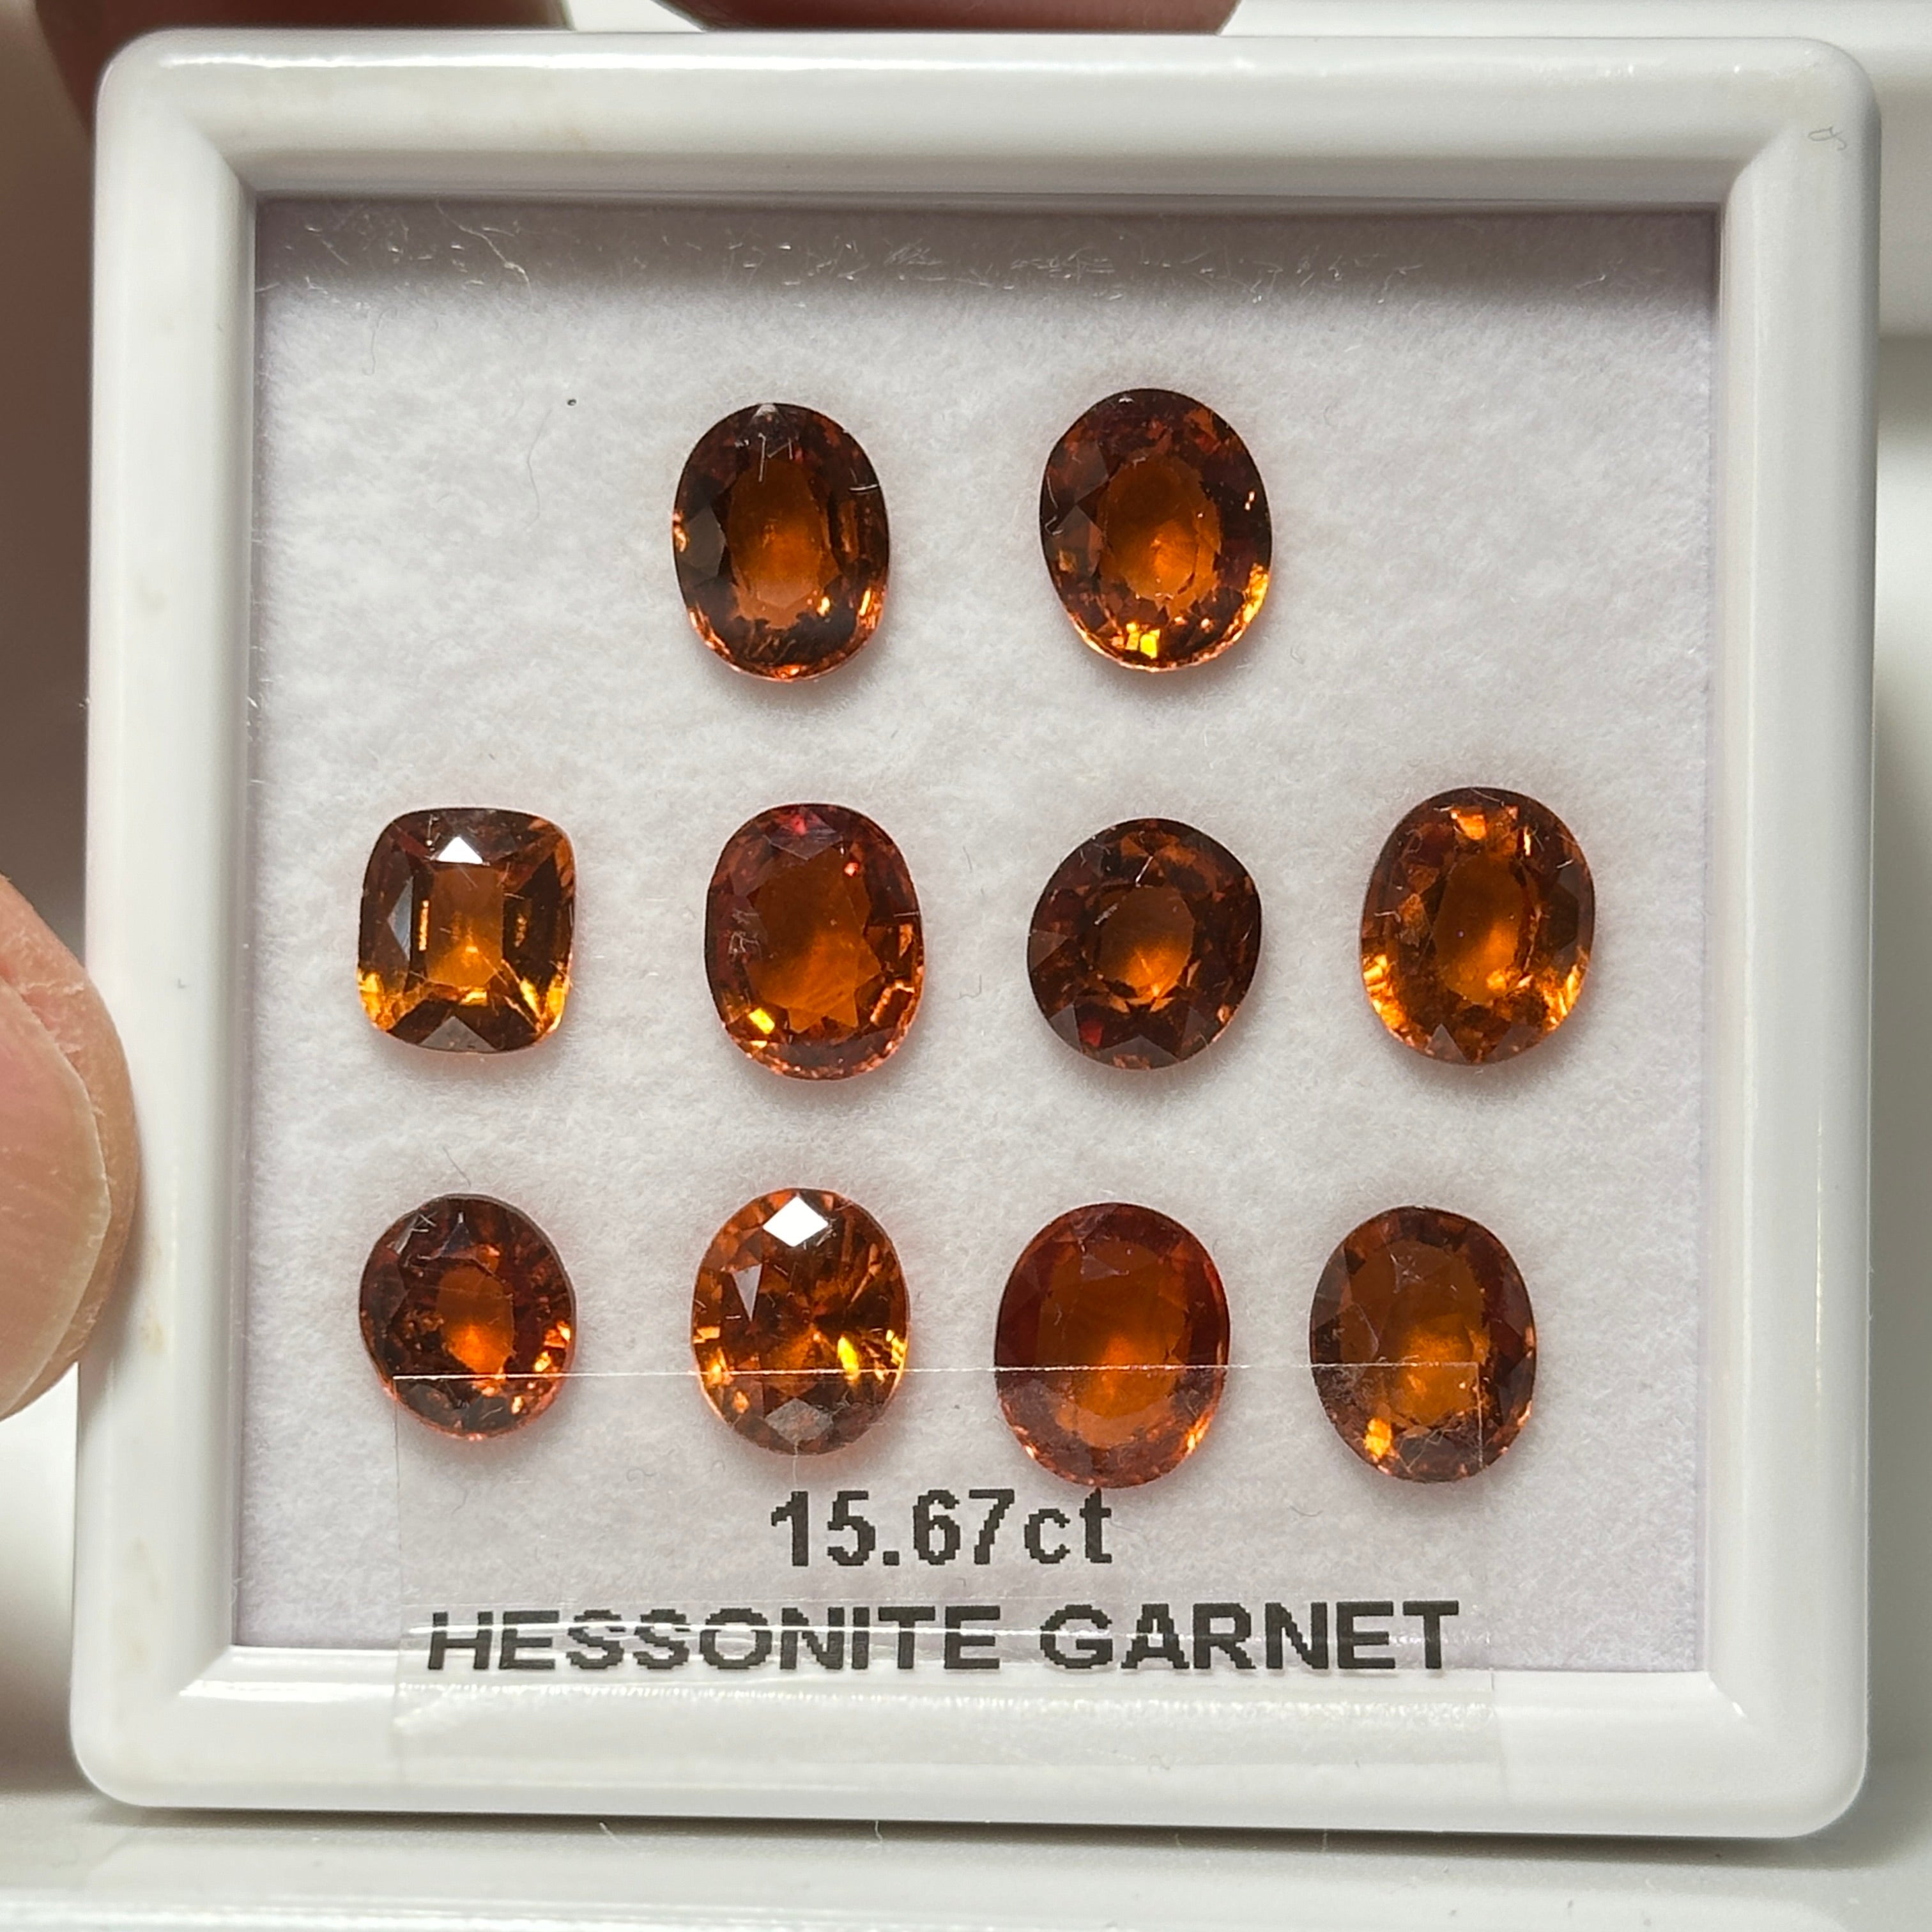 15.67ct Hessonite Garnet Lot, Untreated Unheated, native cut